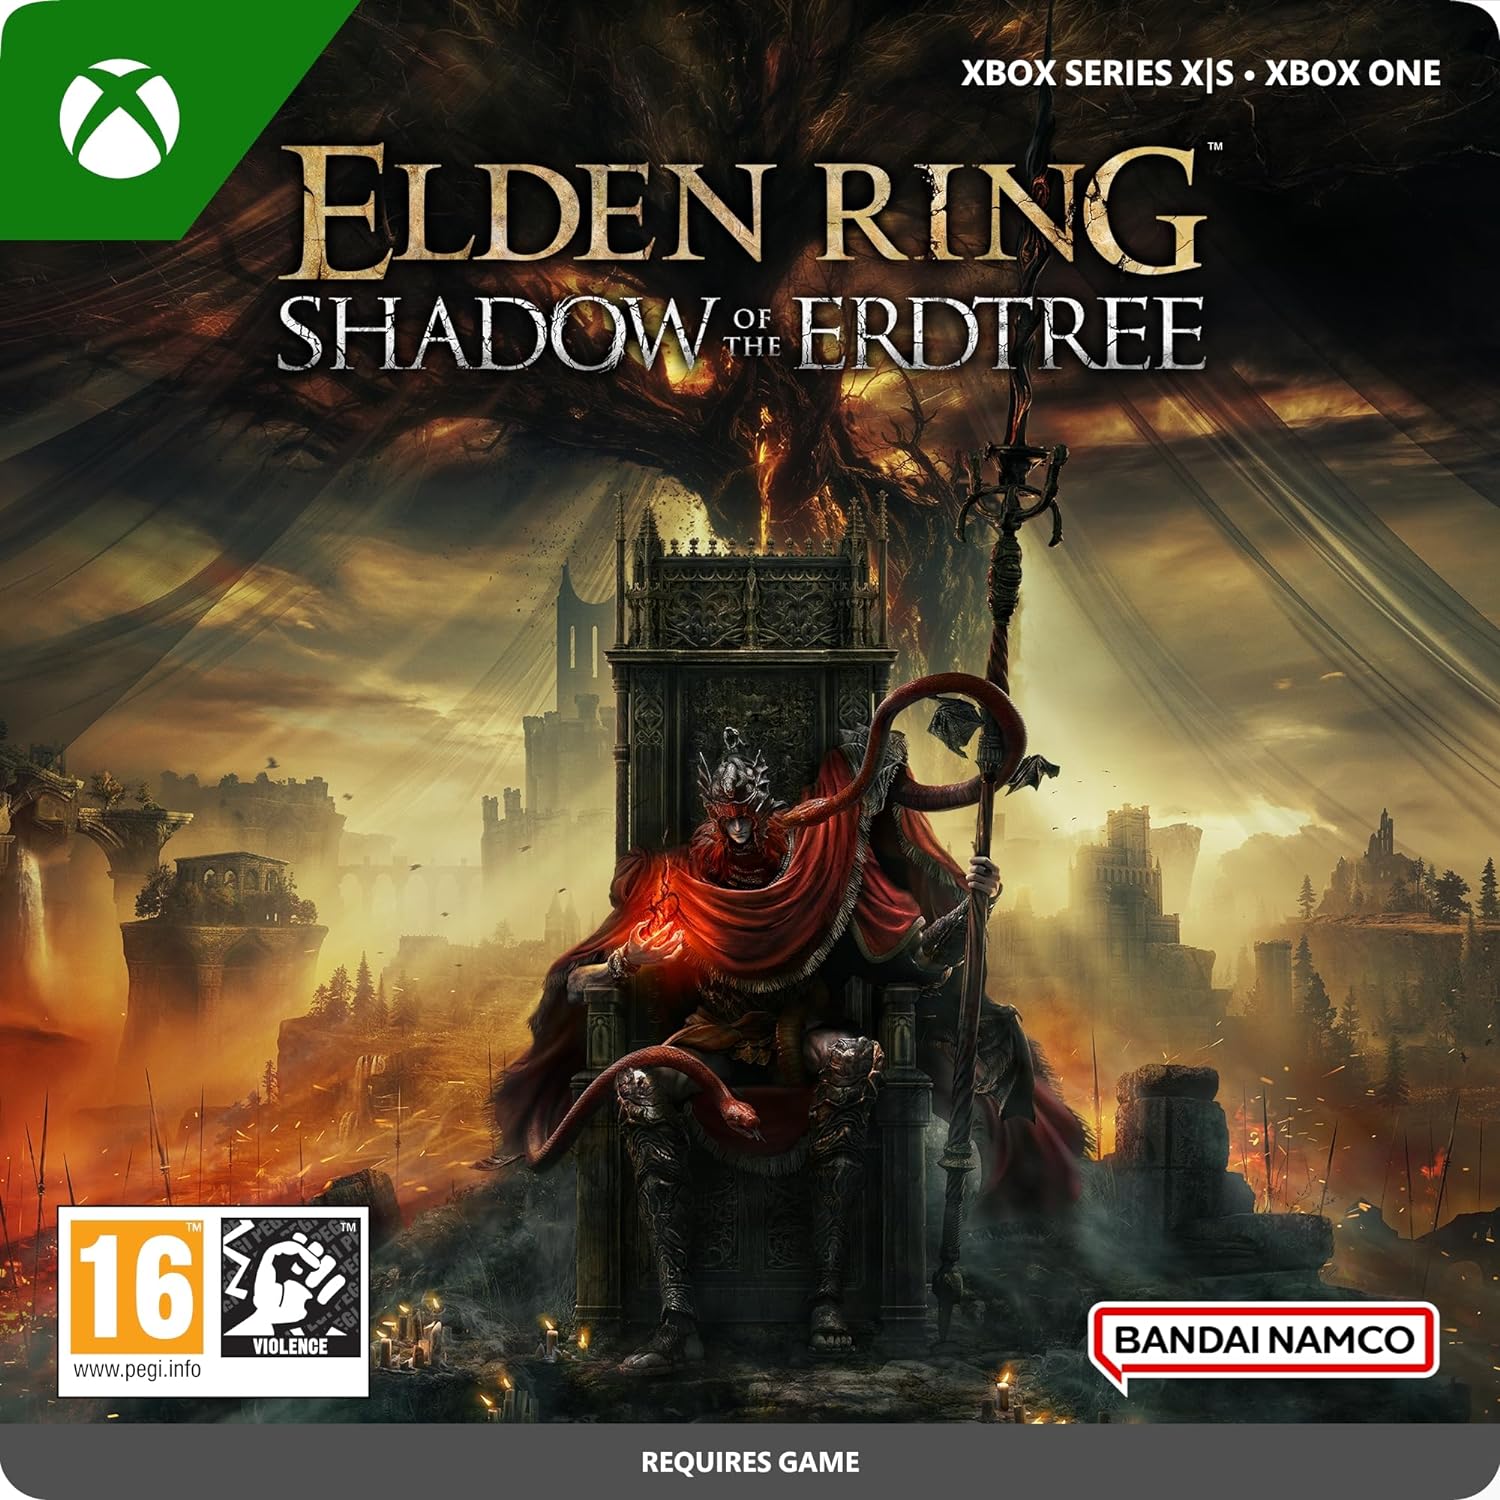 ELDEN RING Shadow of the Erdtree Digital Download Key (Xbox One/Series X): Europe